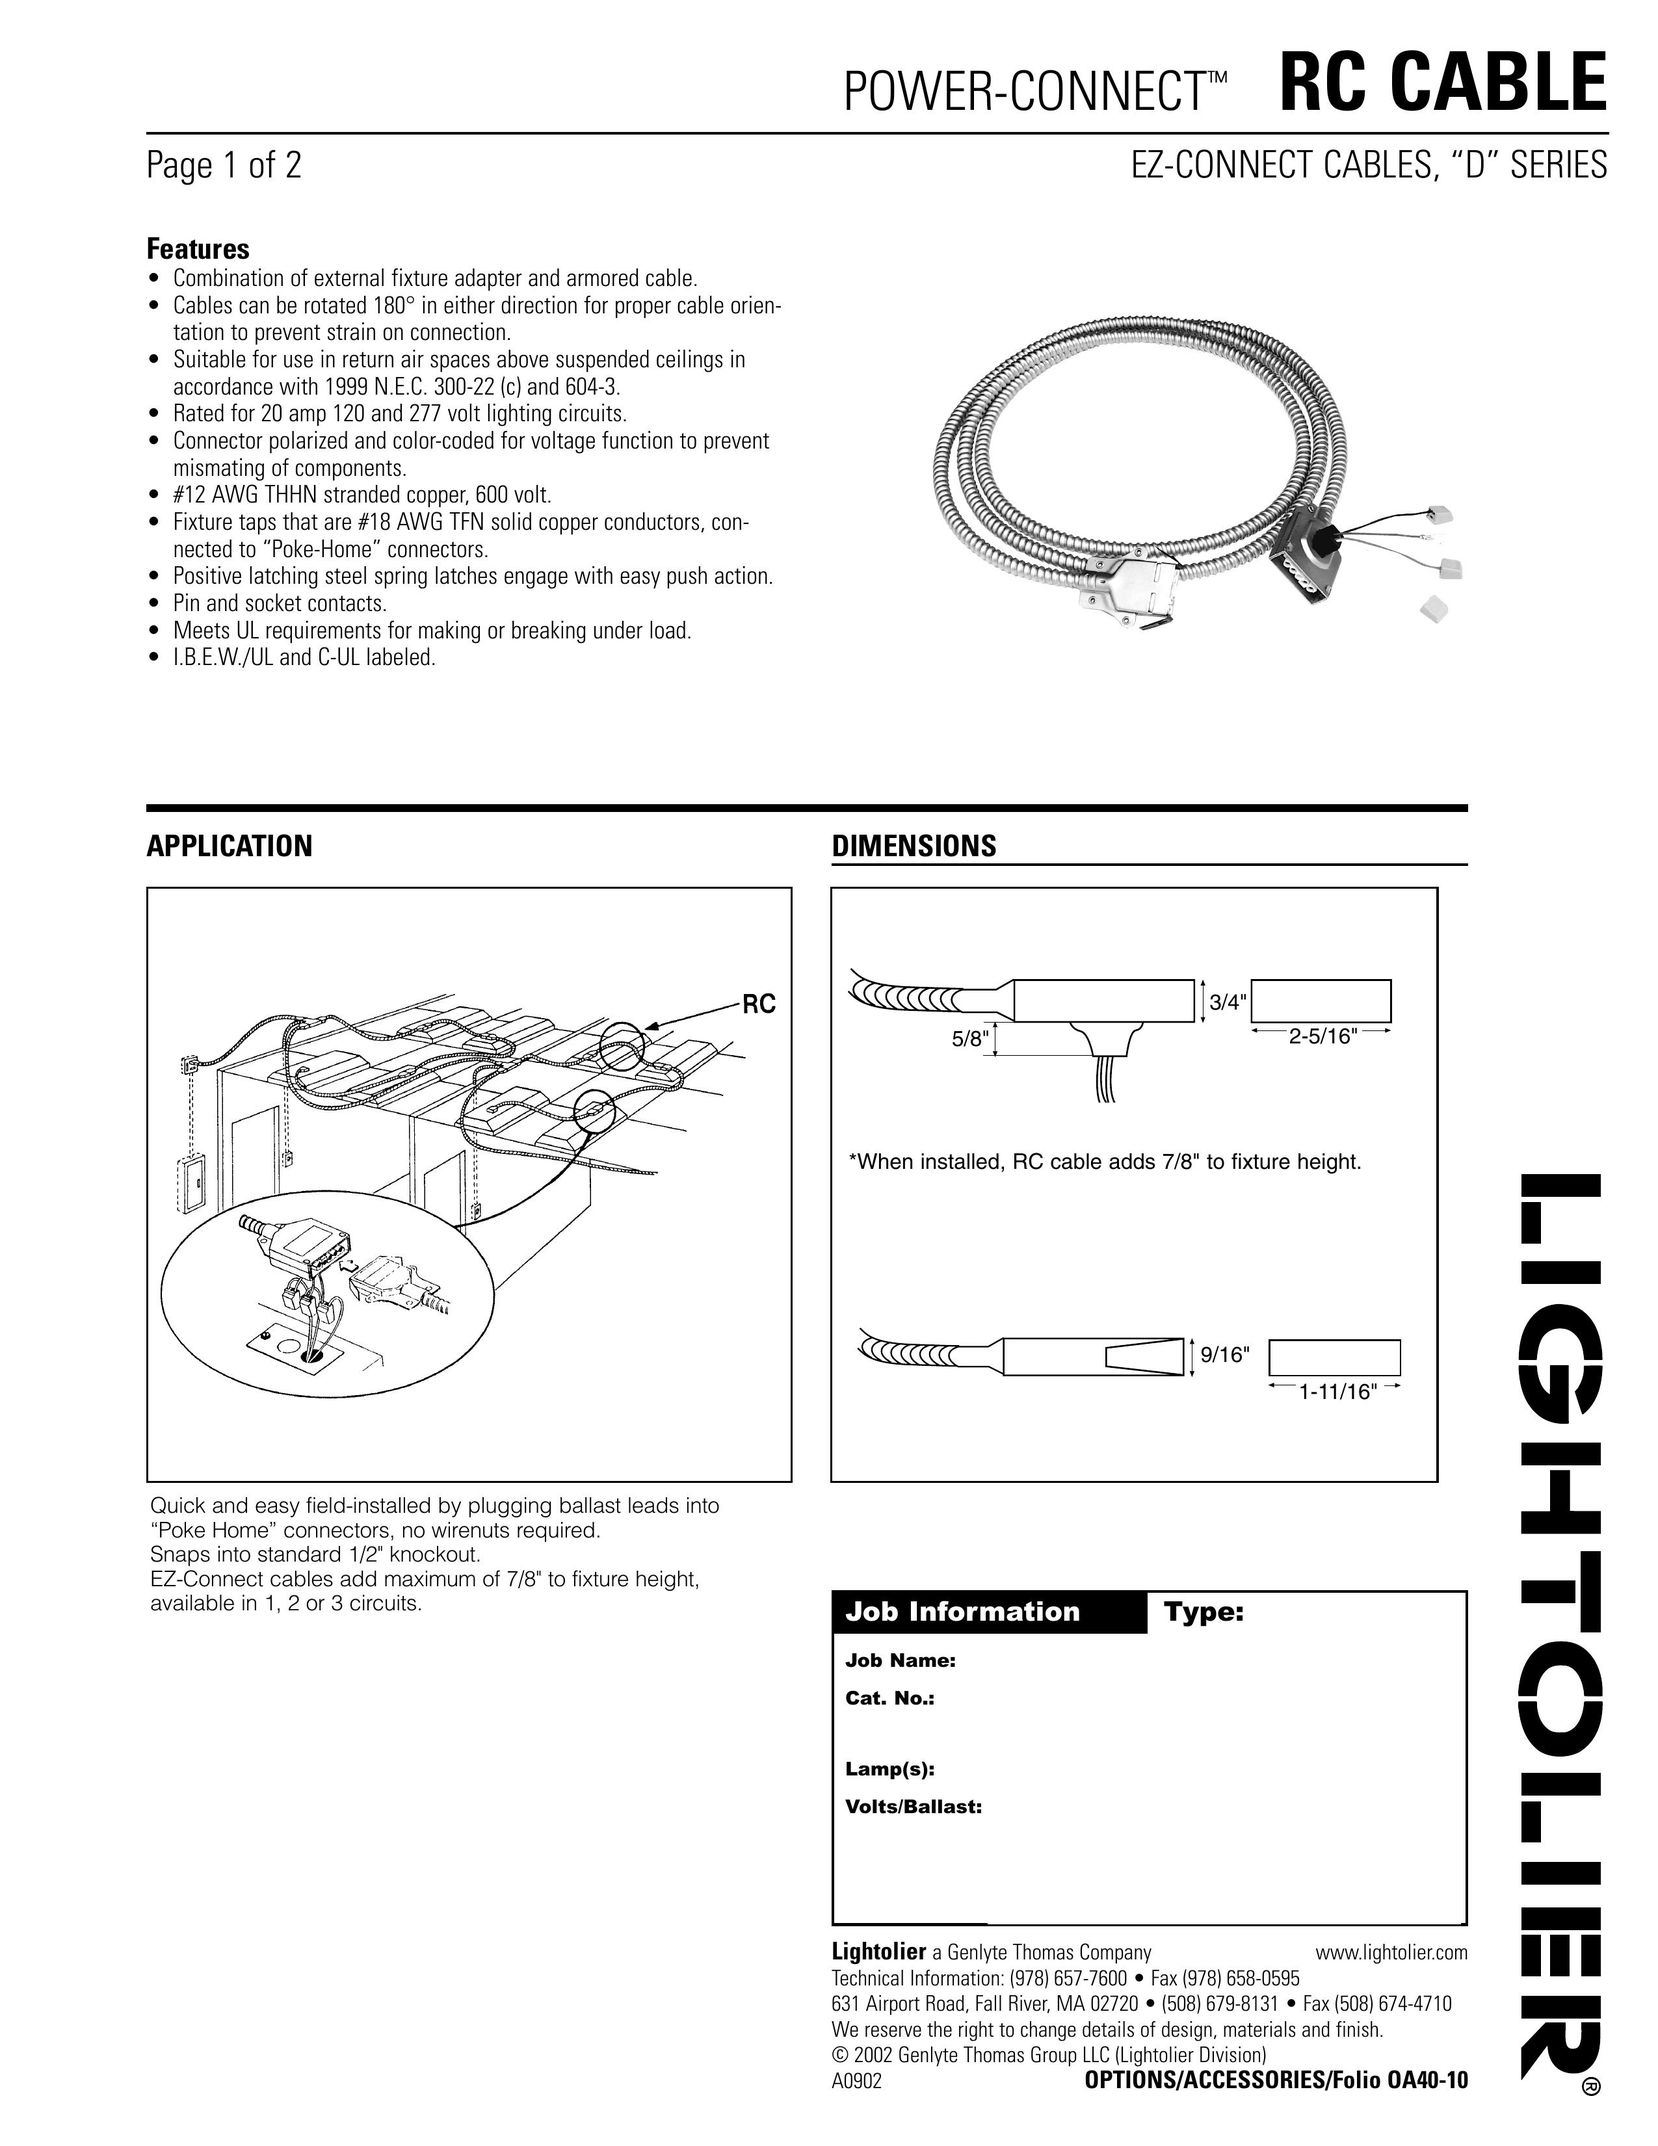 Lightolier "D" Series Indoor Furnishings User Manual